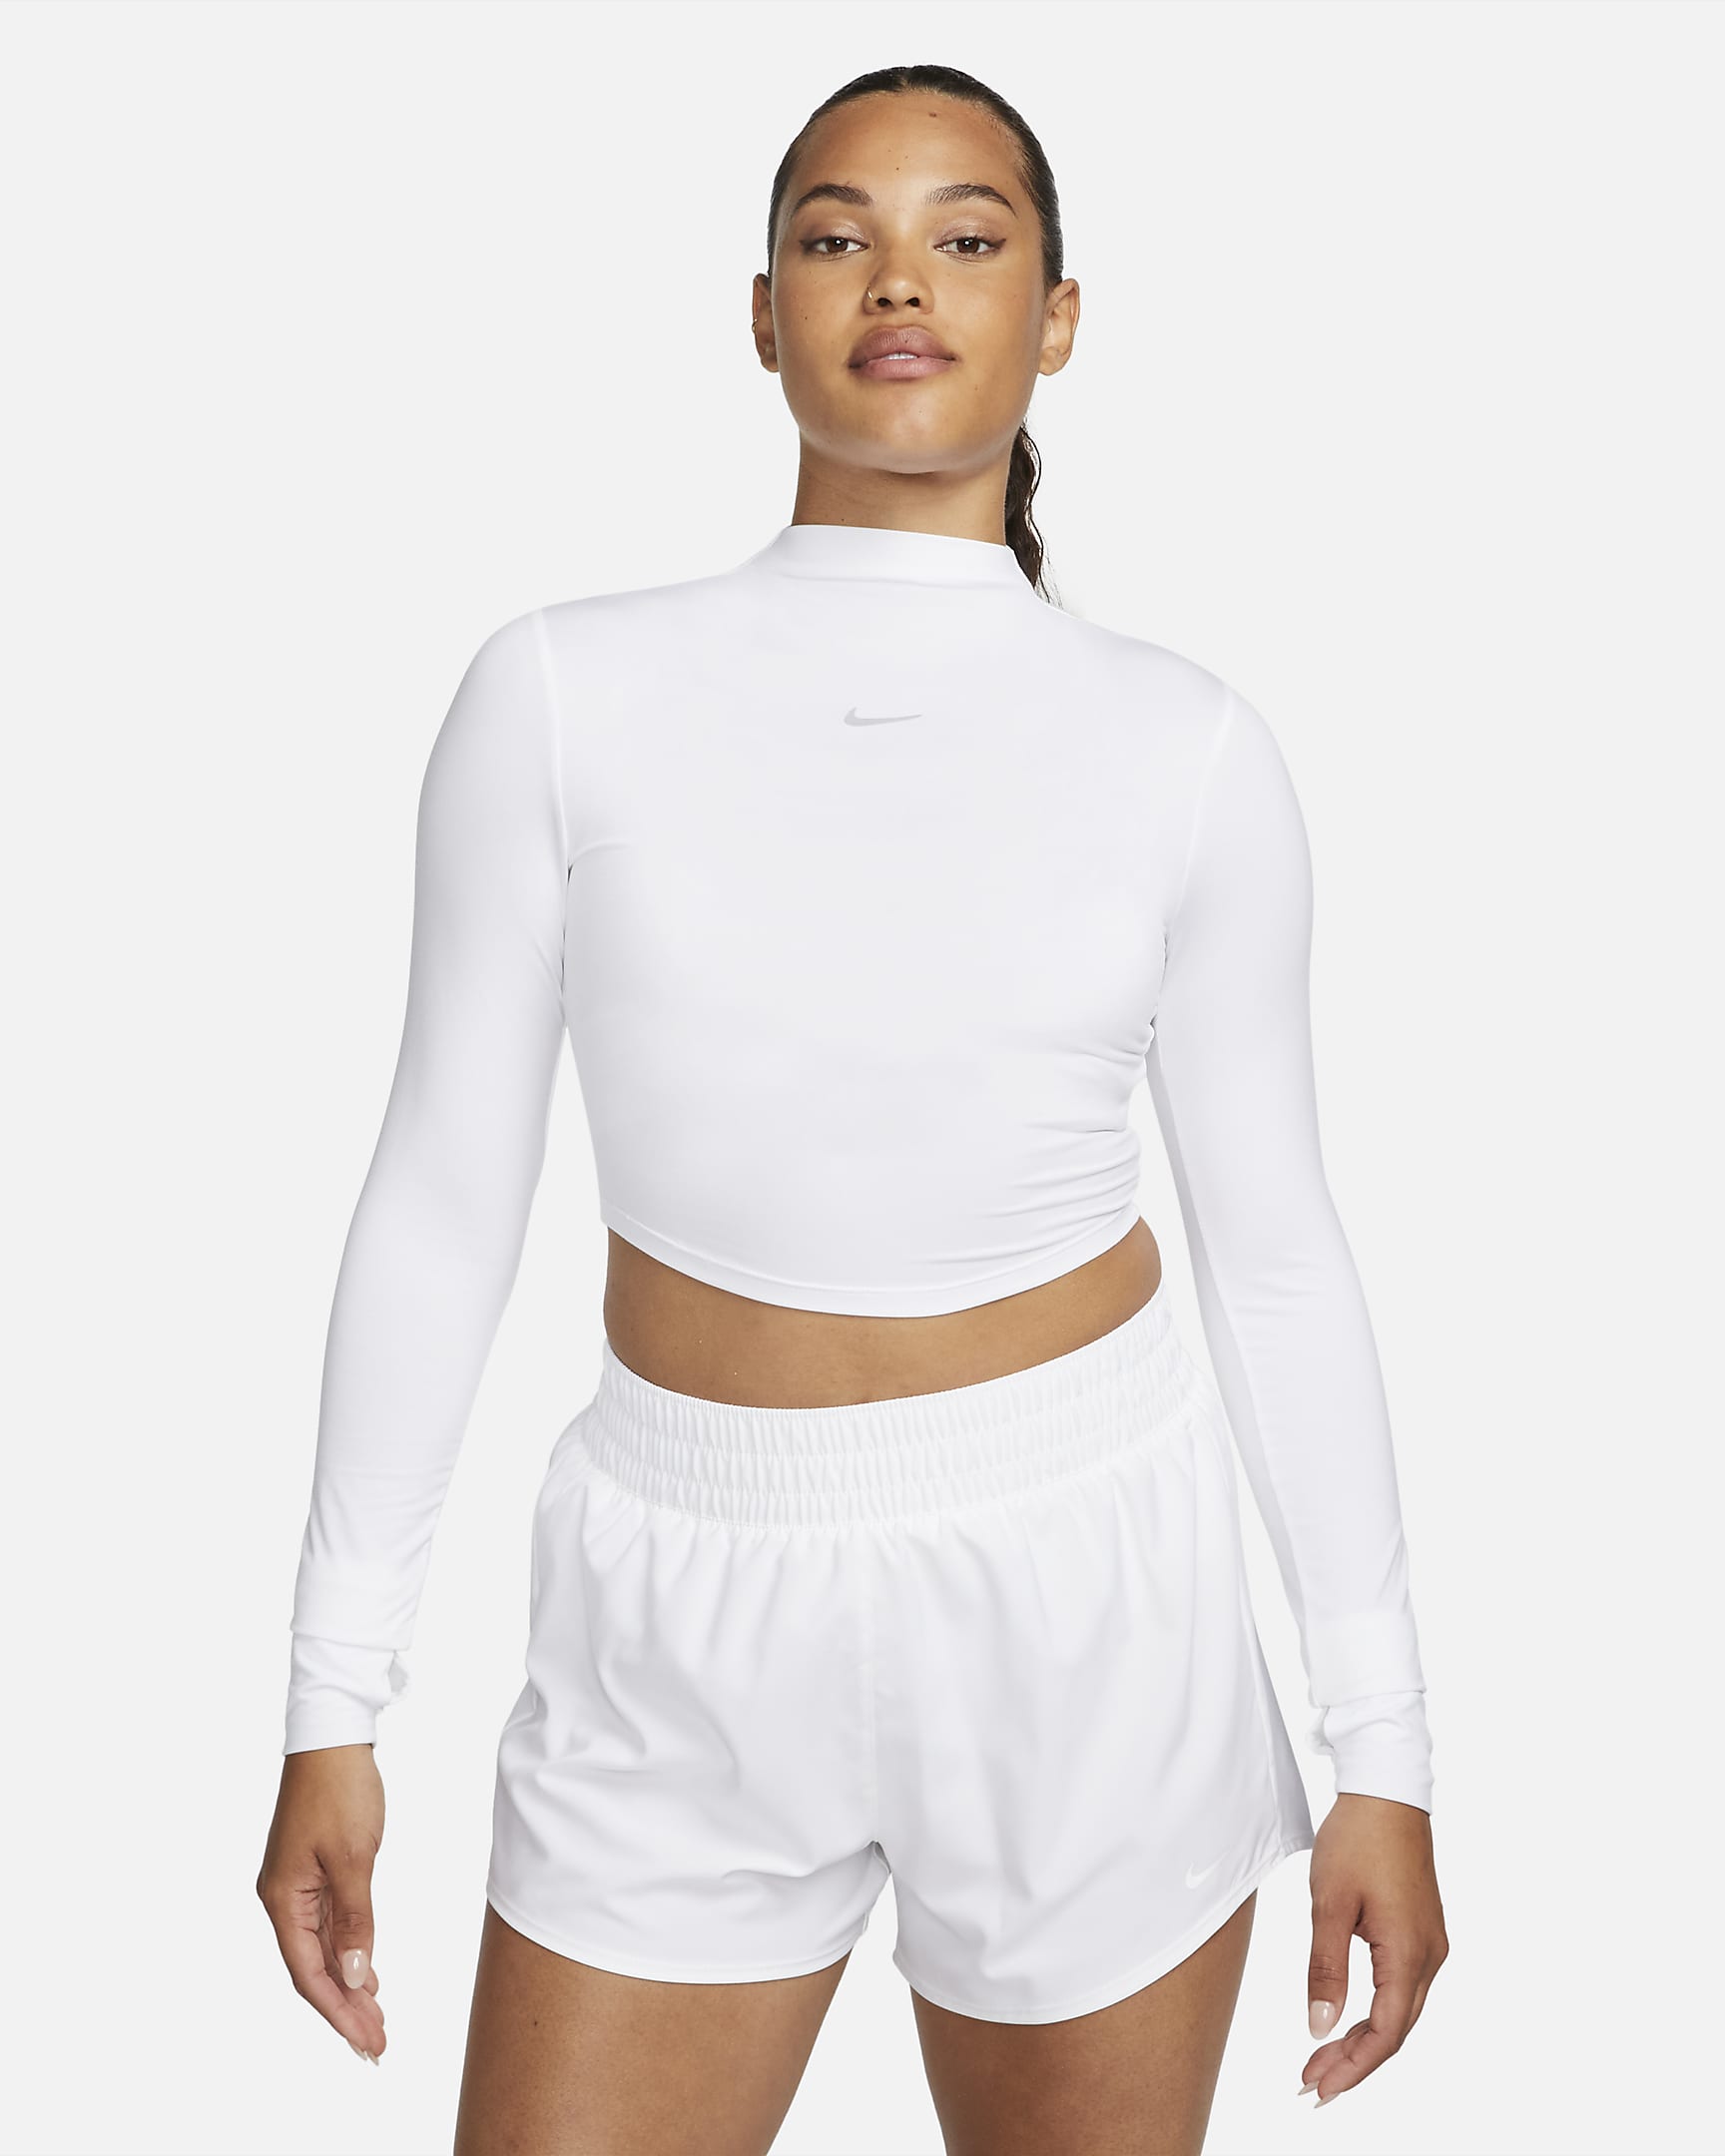 Nike Dri-FIT One Luxe Women's Long-Sleeve Cropped Top. Nike.com